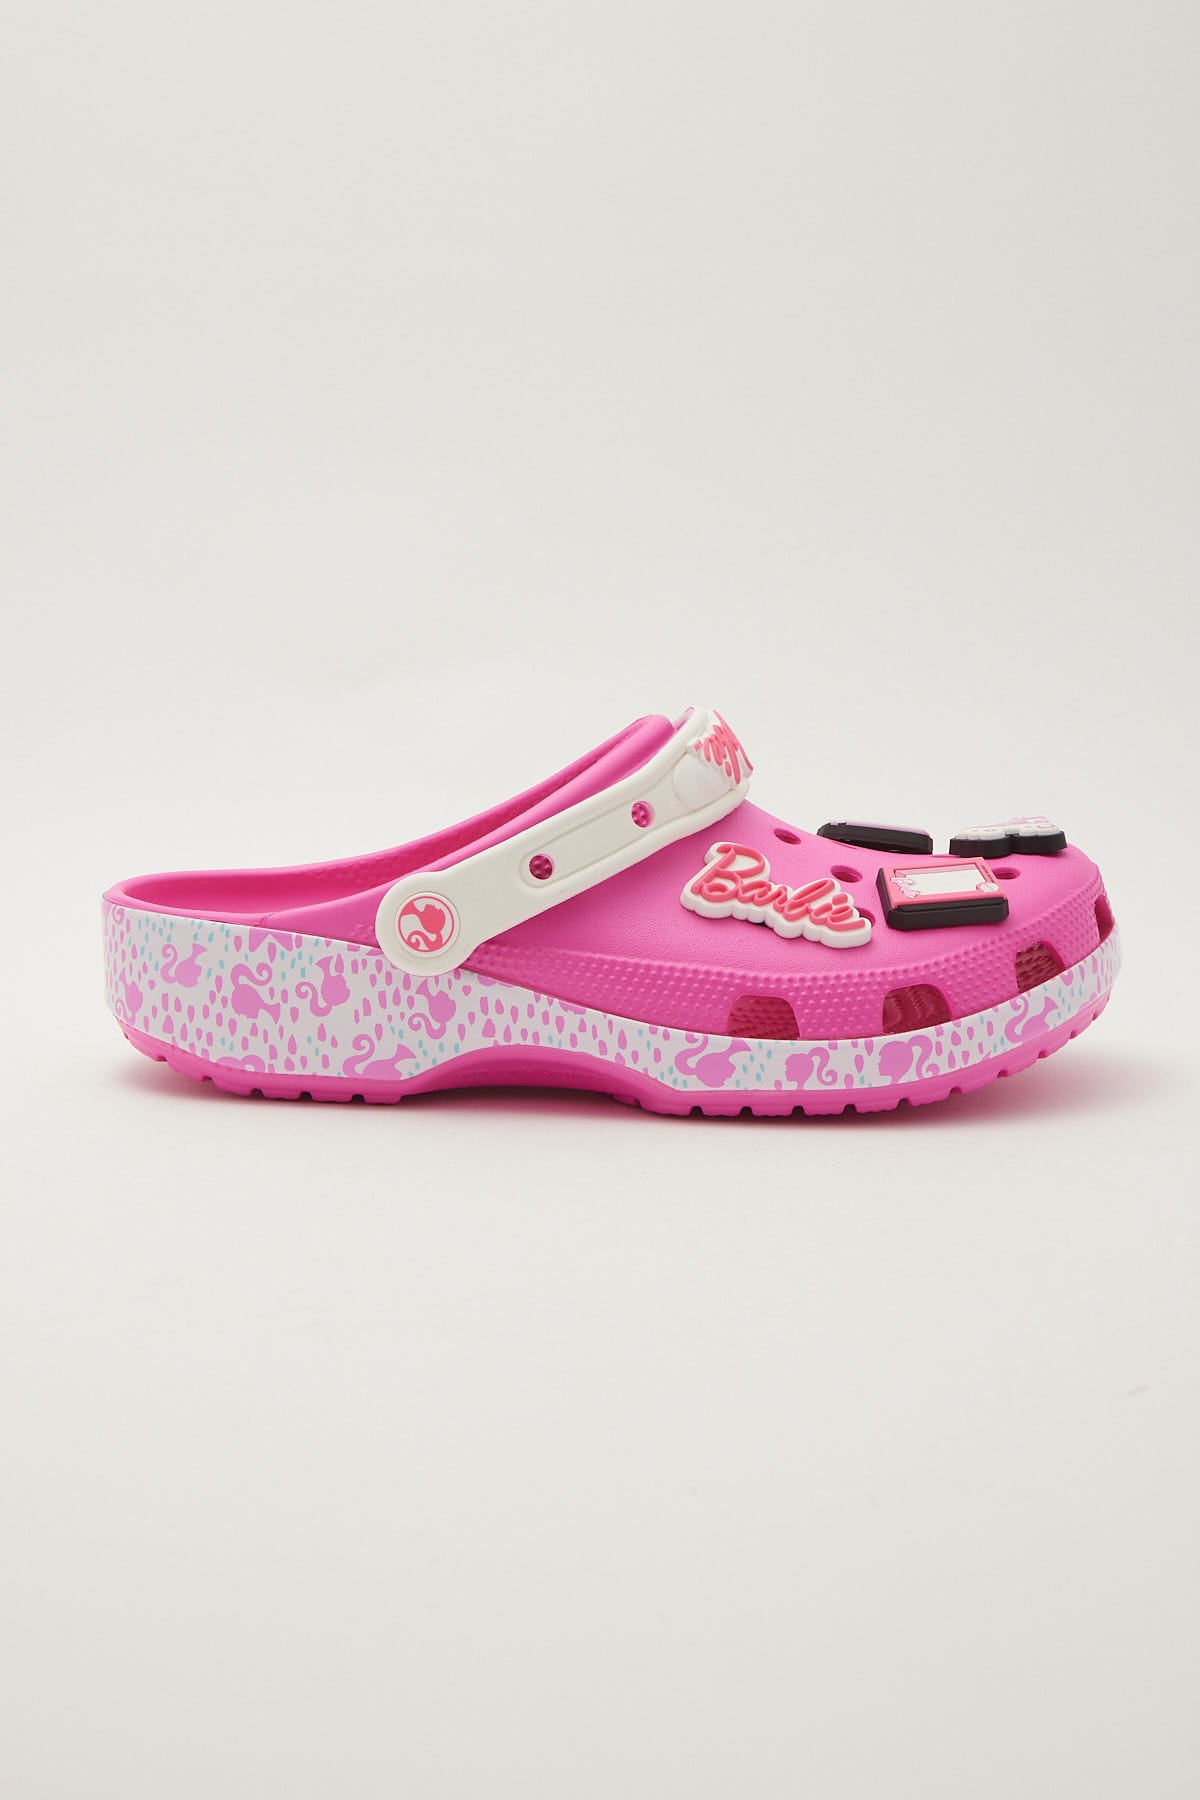 Crocs x Barbie Crush Clog Black & Pink w/ 7 Jibbitz Size 10W/8M (NEW WITH  TAG)